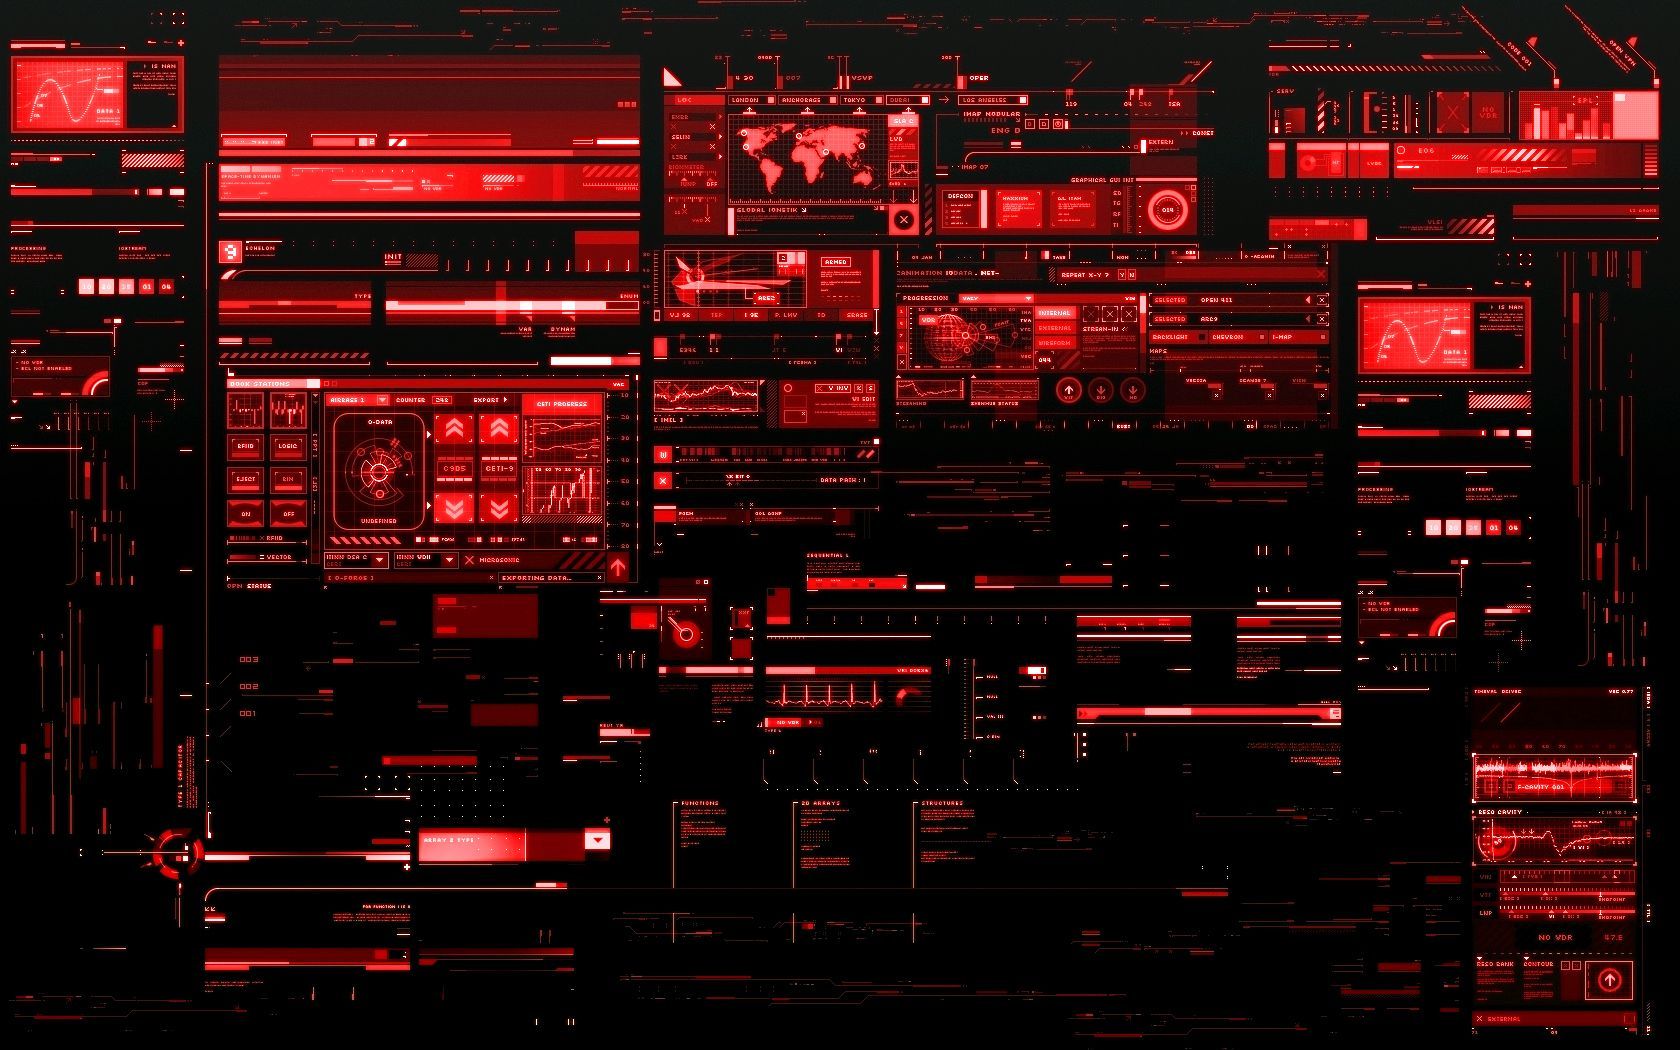 Extra Wallpapers - Hi tech desktop control center Red